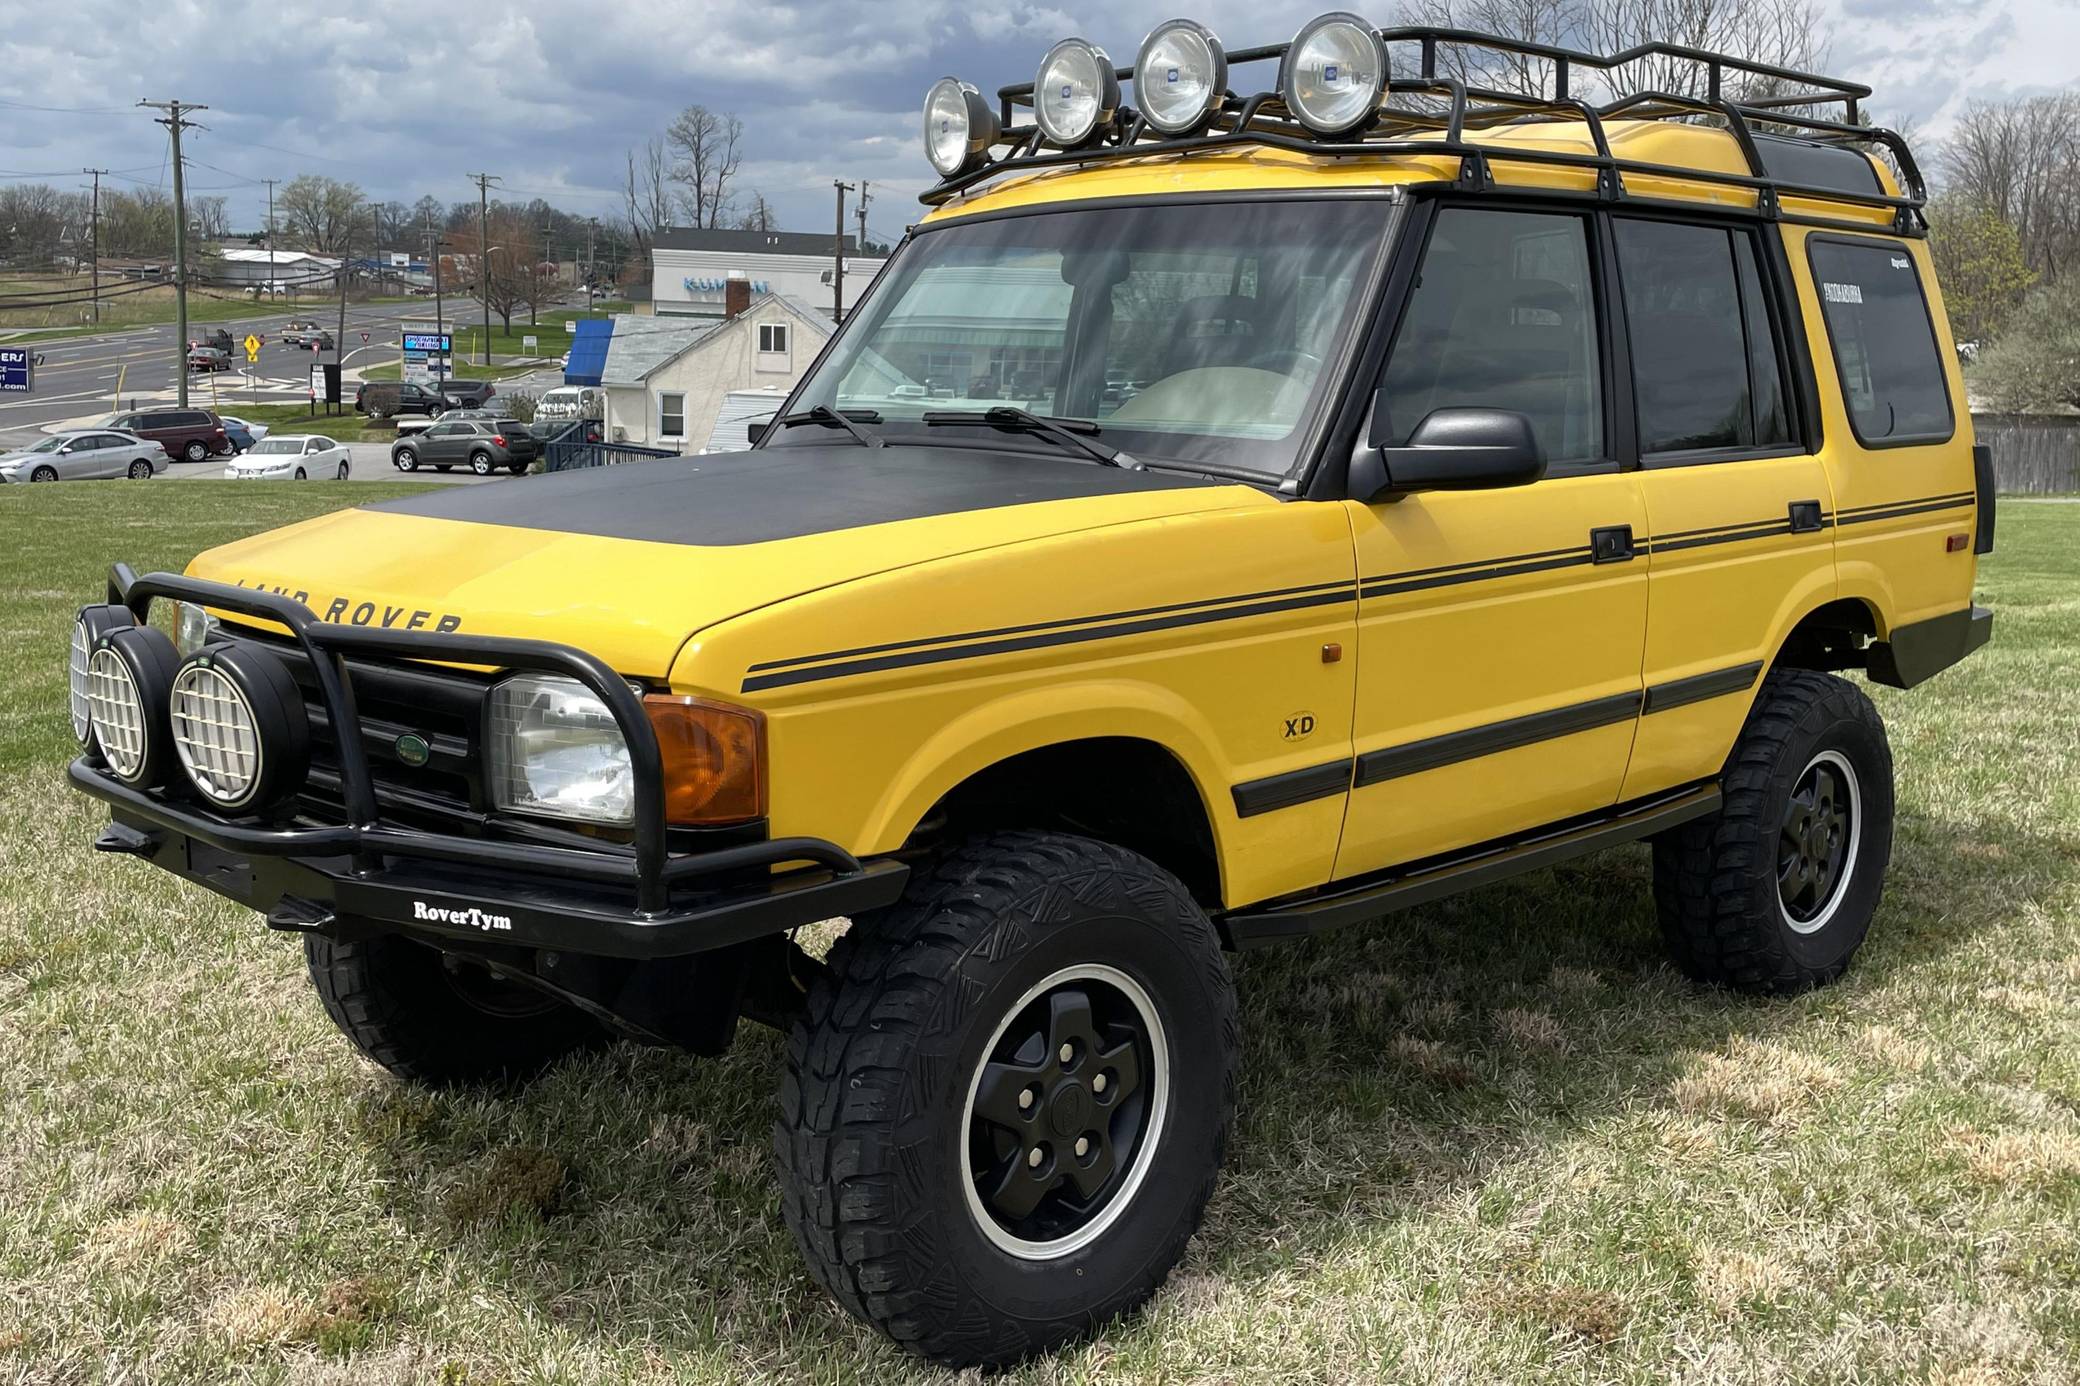 Comorama Verstikkend verlies uzelf 1997 Land Rover Discovery XD for Sale - Cars & Bids